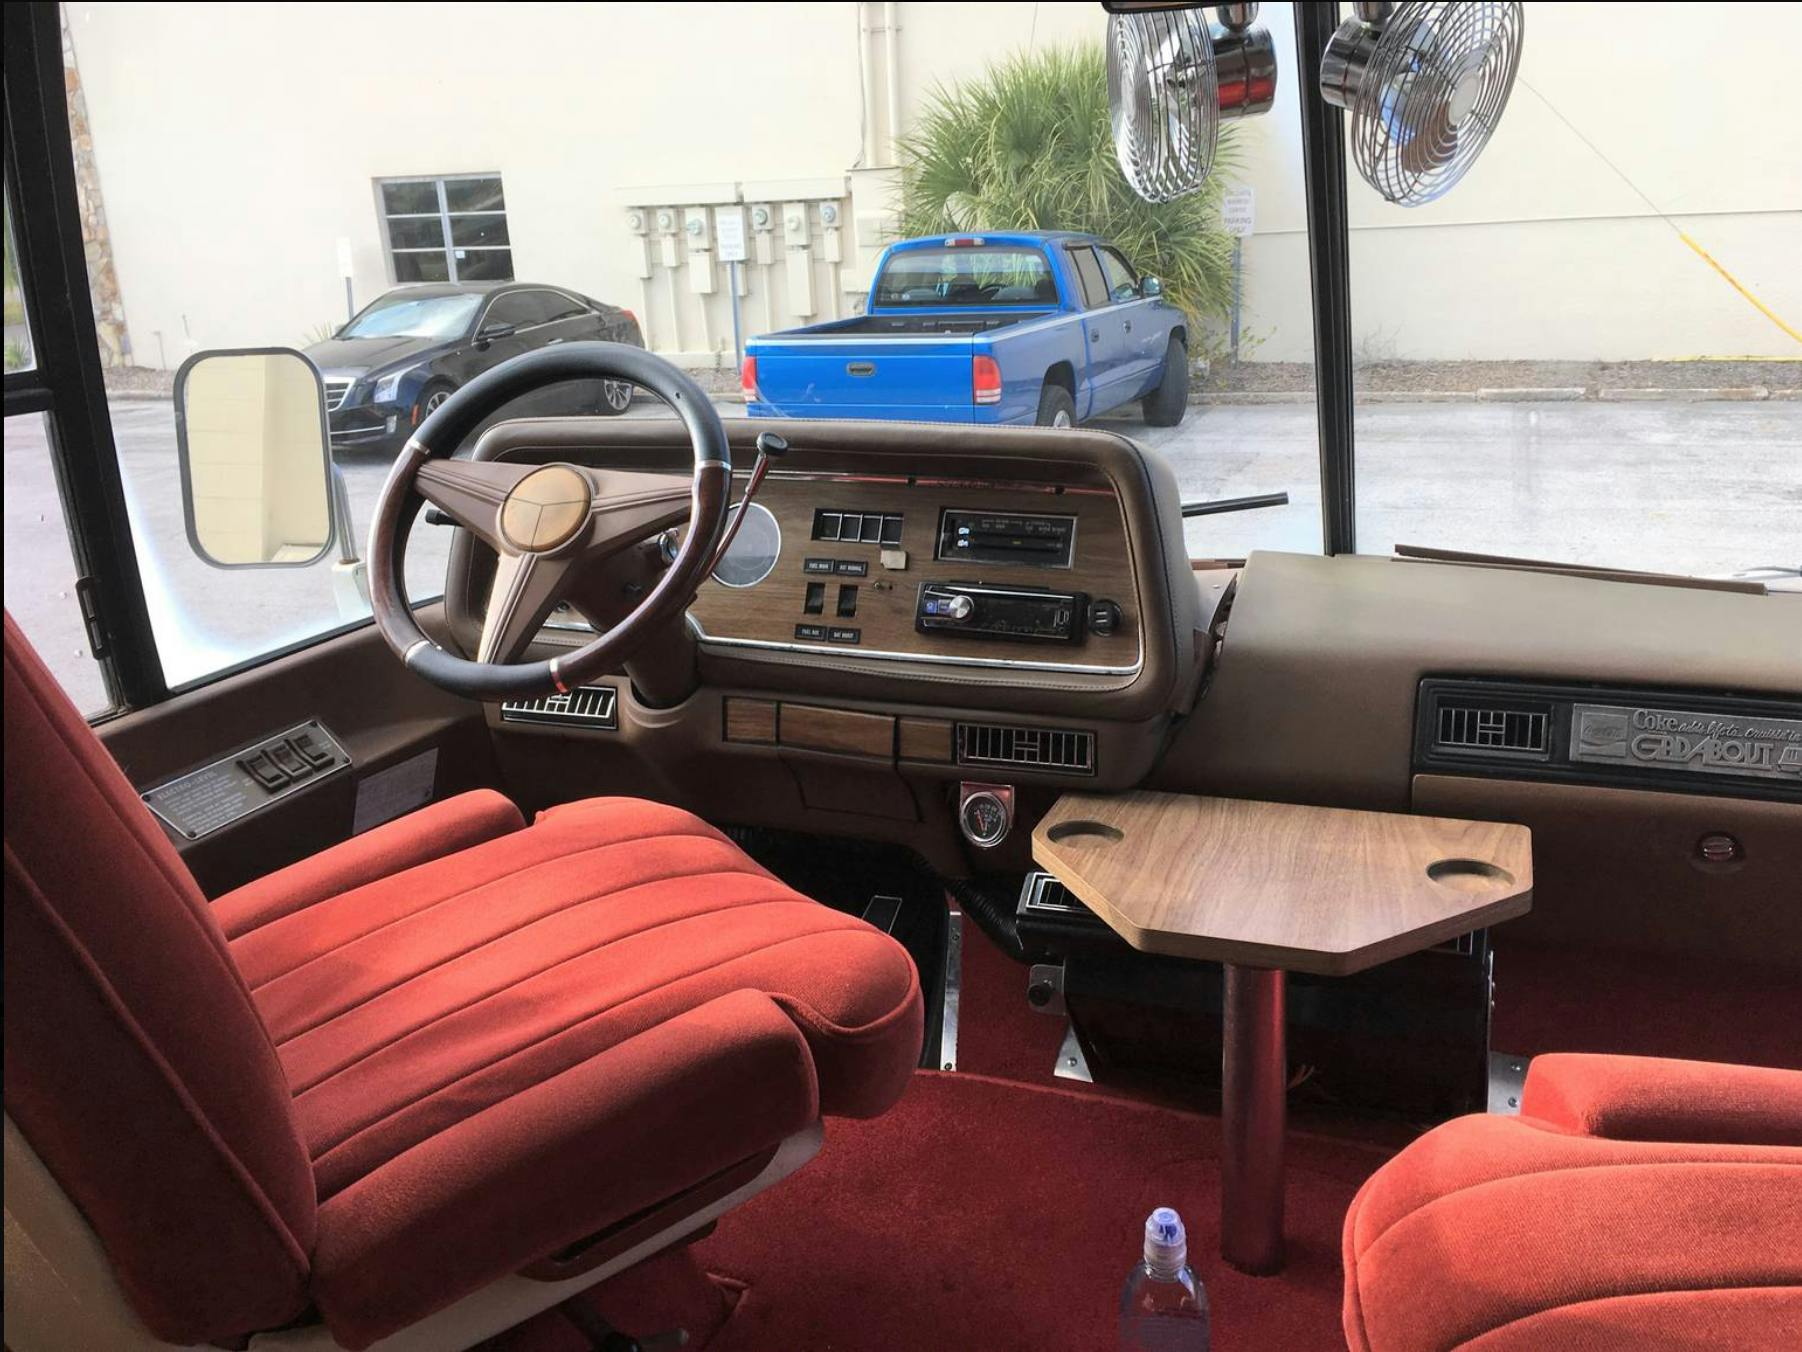 1978 GMC RV interior